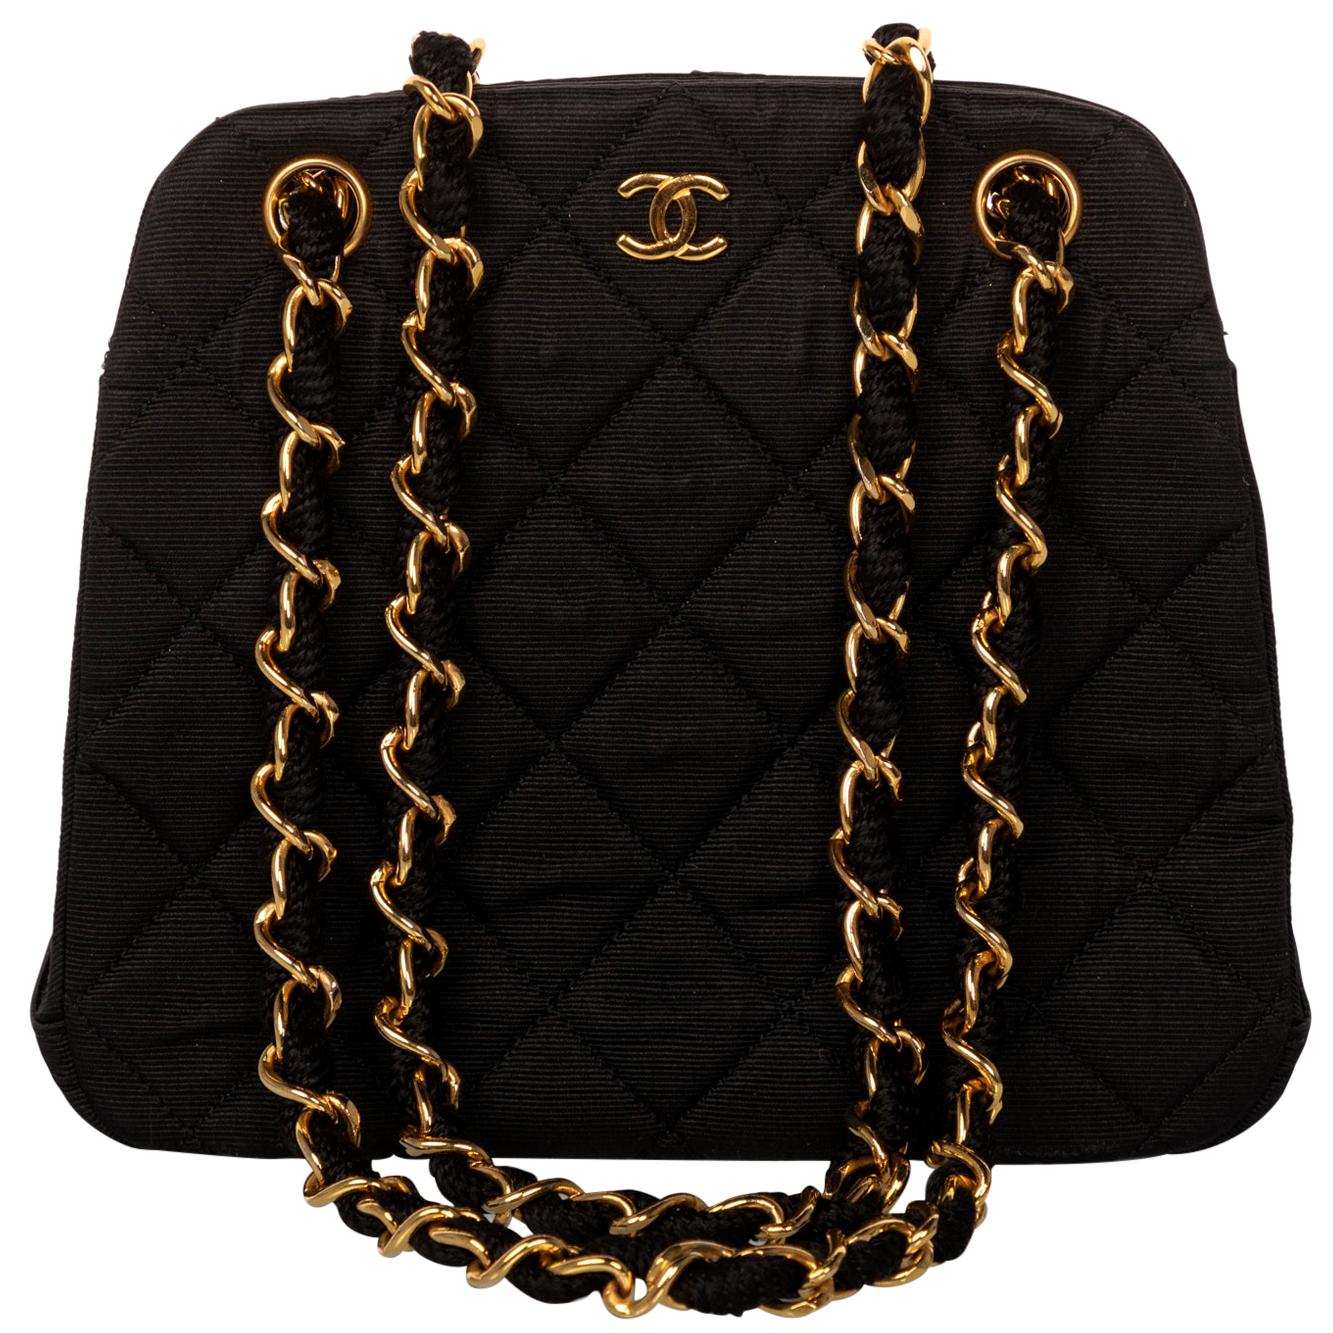 Chanel Handbags and their fashion icon designer Boca Raton